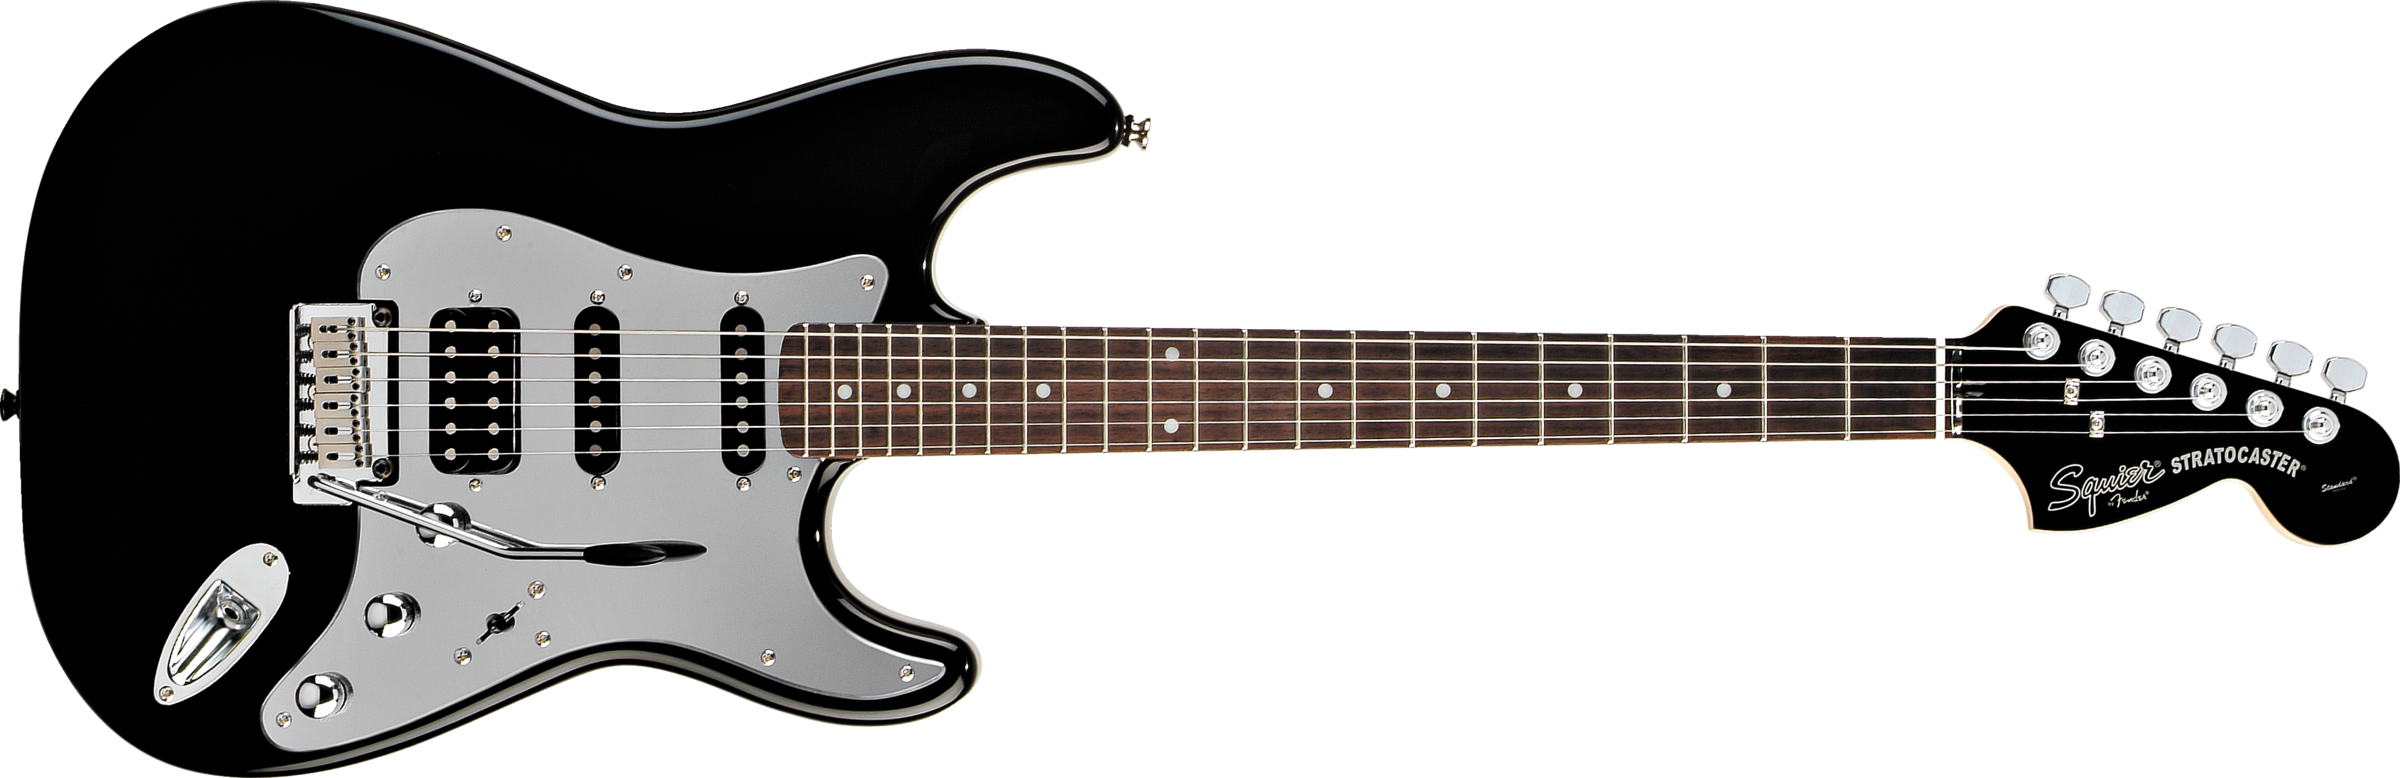 Black Electric Guitar Transparent PNG